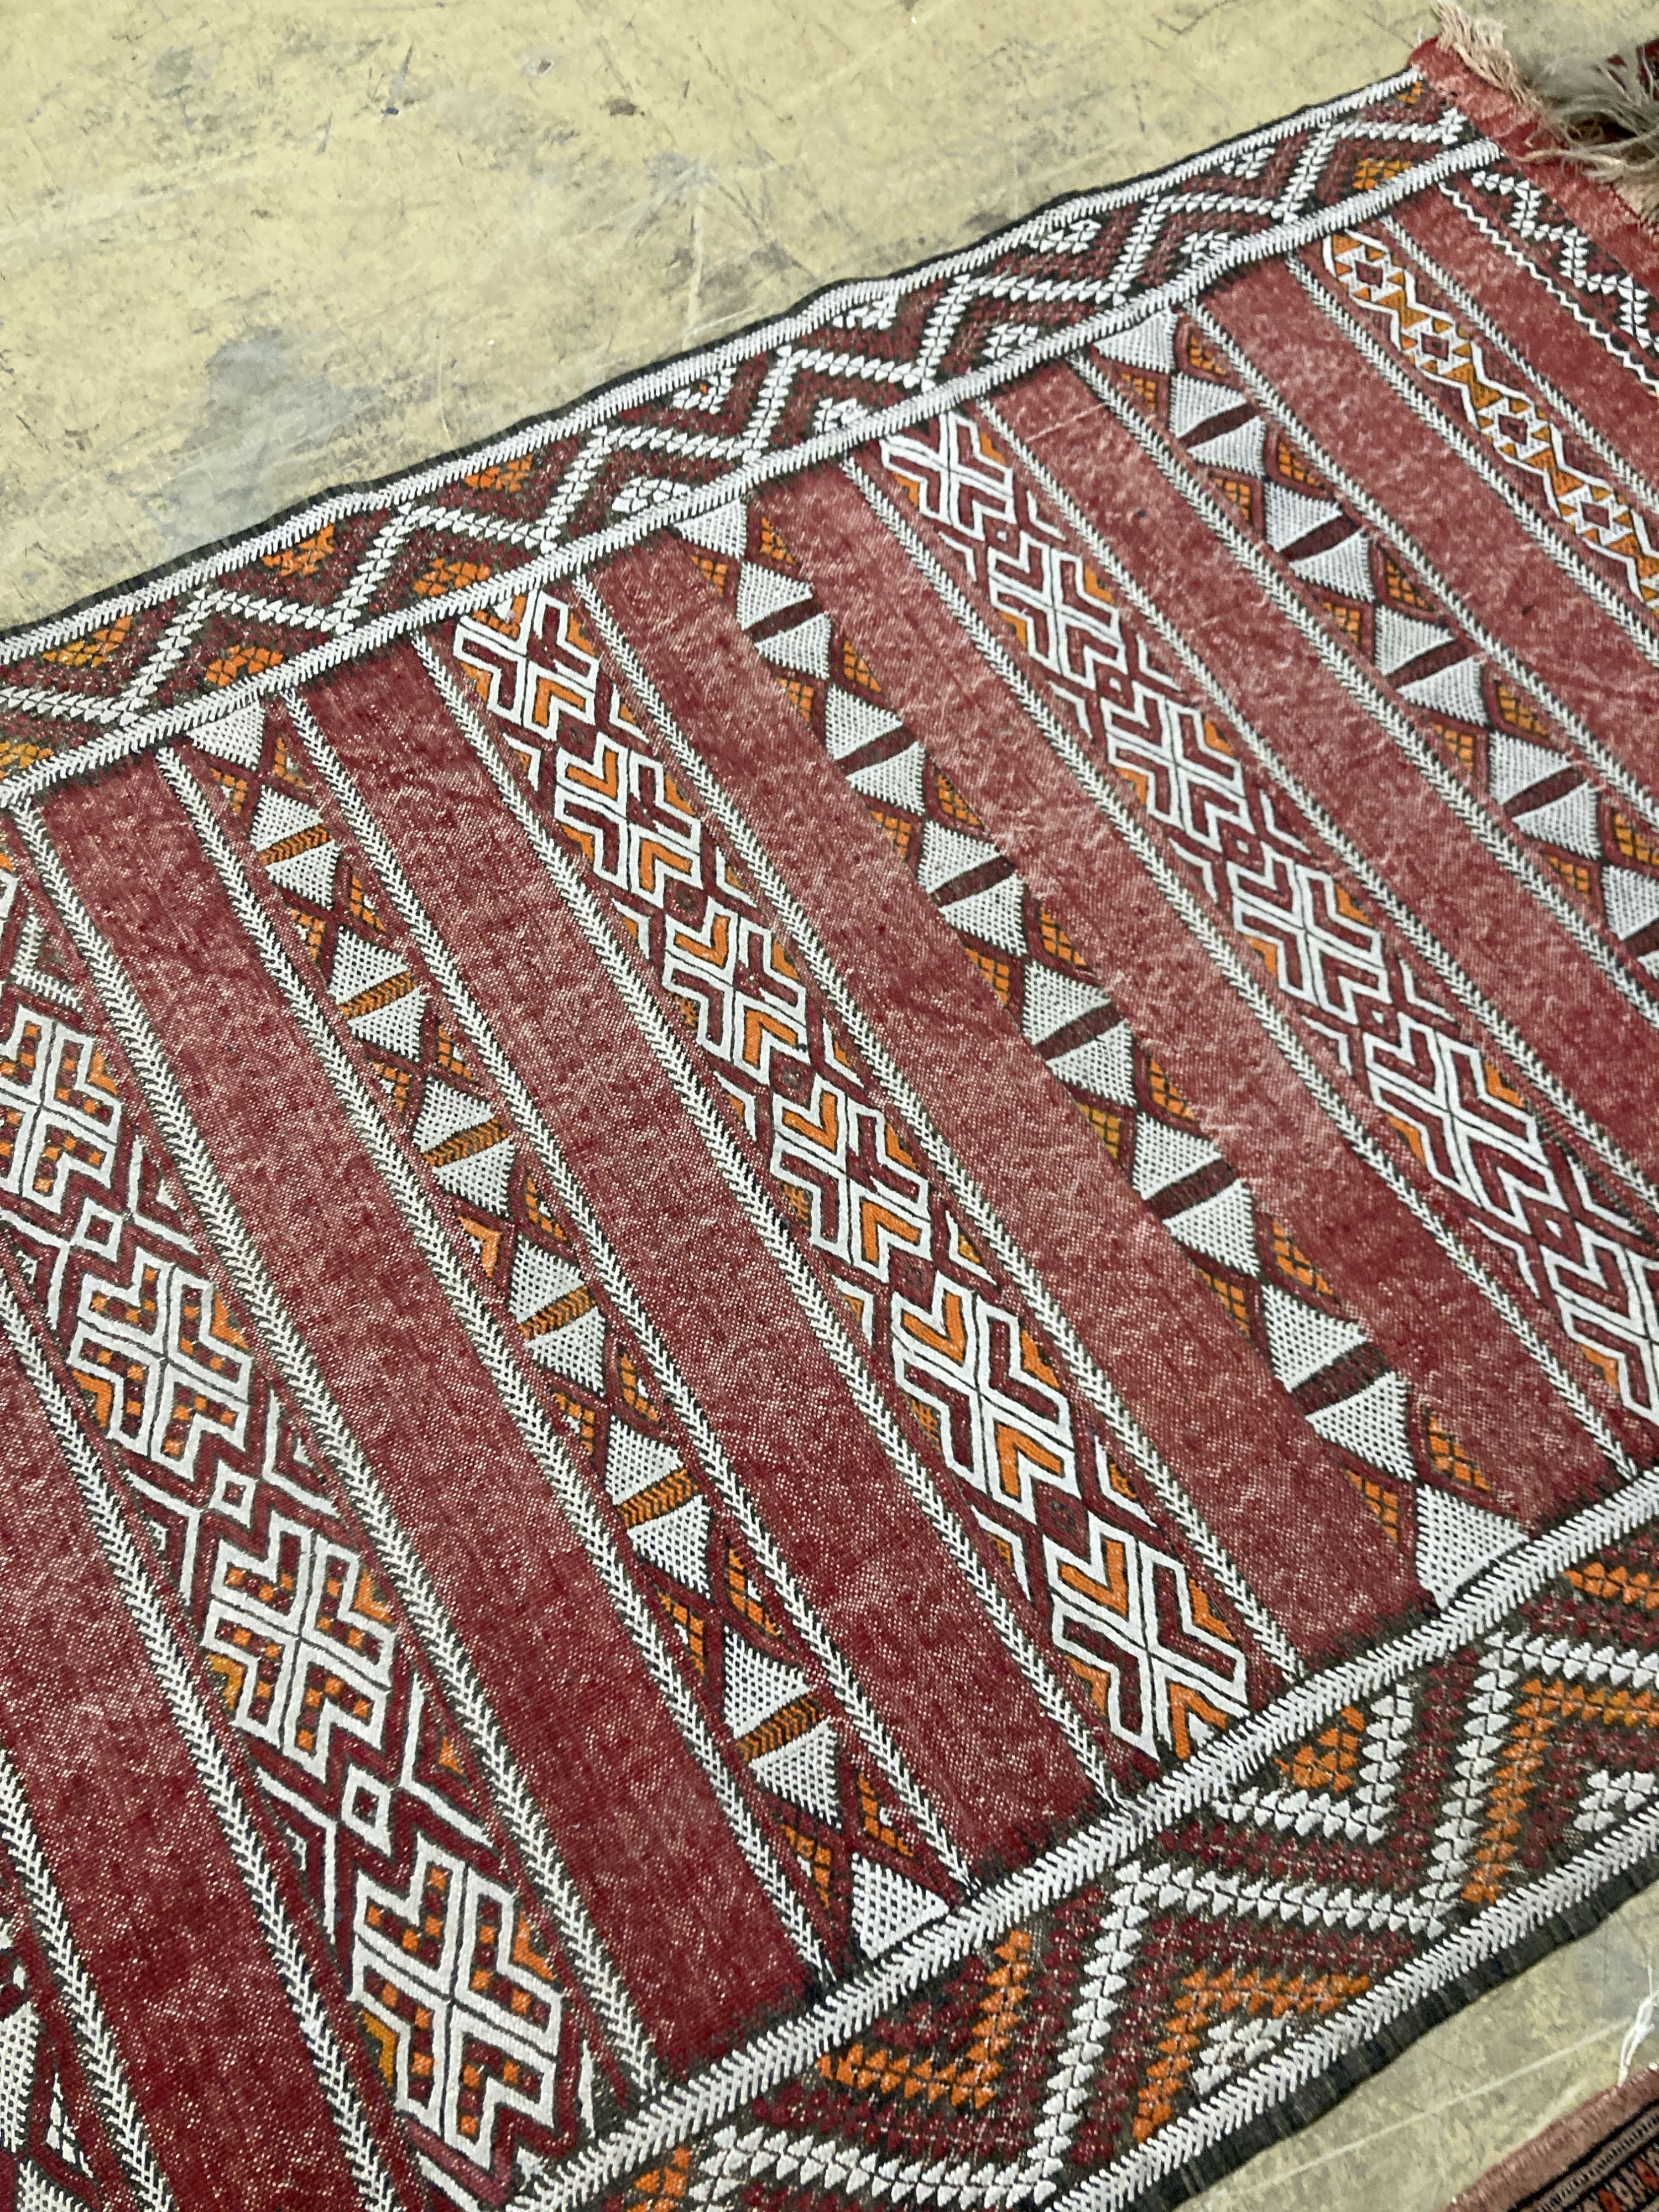 A Bokhara orange ground rug 198 x 125 cms, a smaller Anatolian flat weave rug and Bokhara prayer mat.